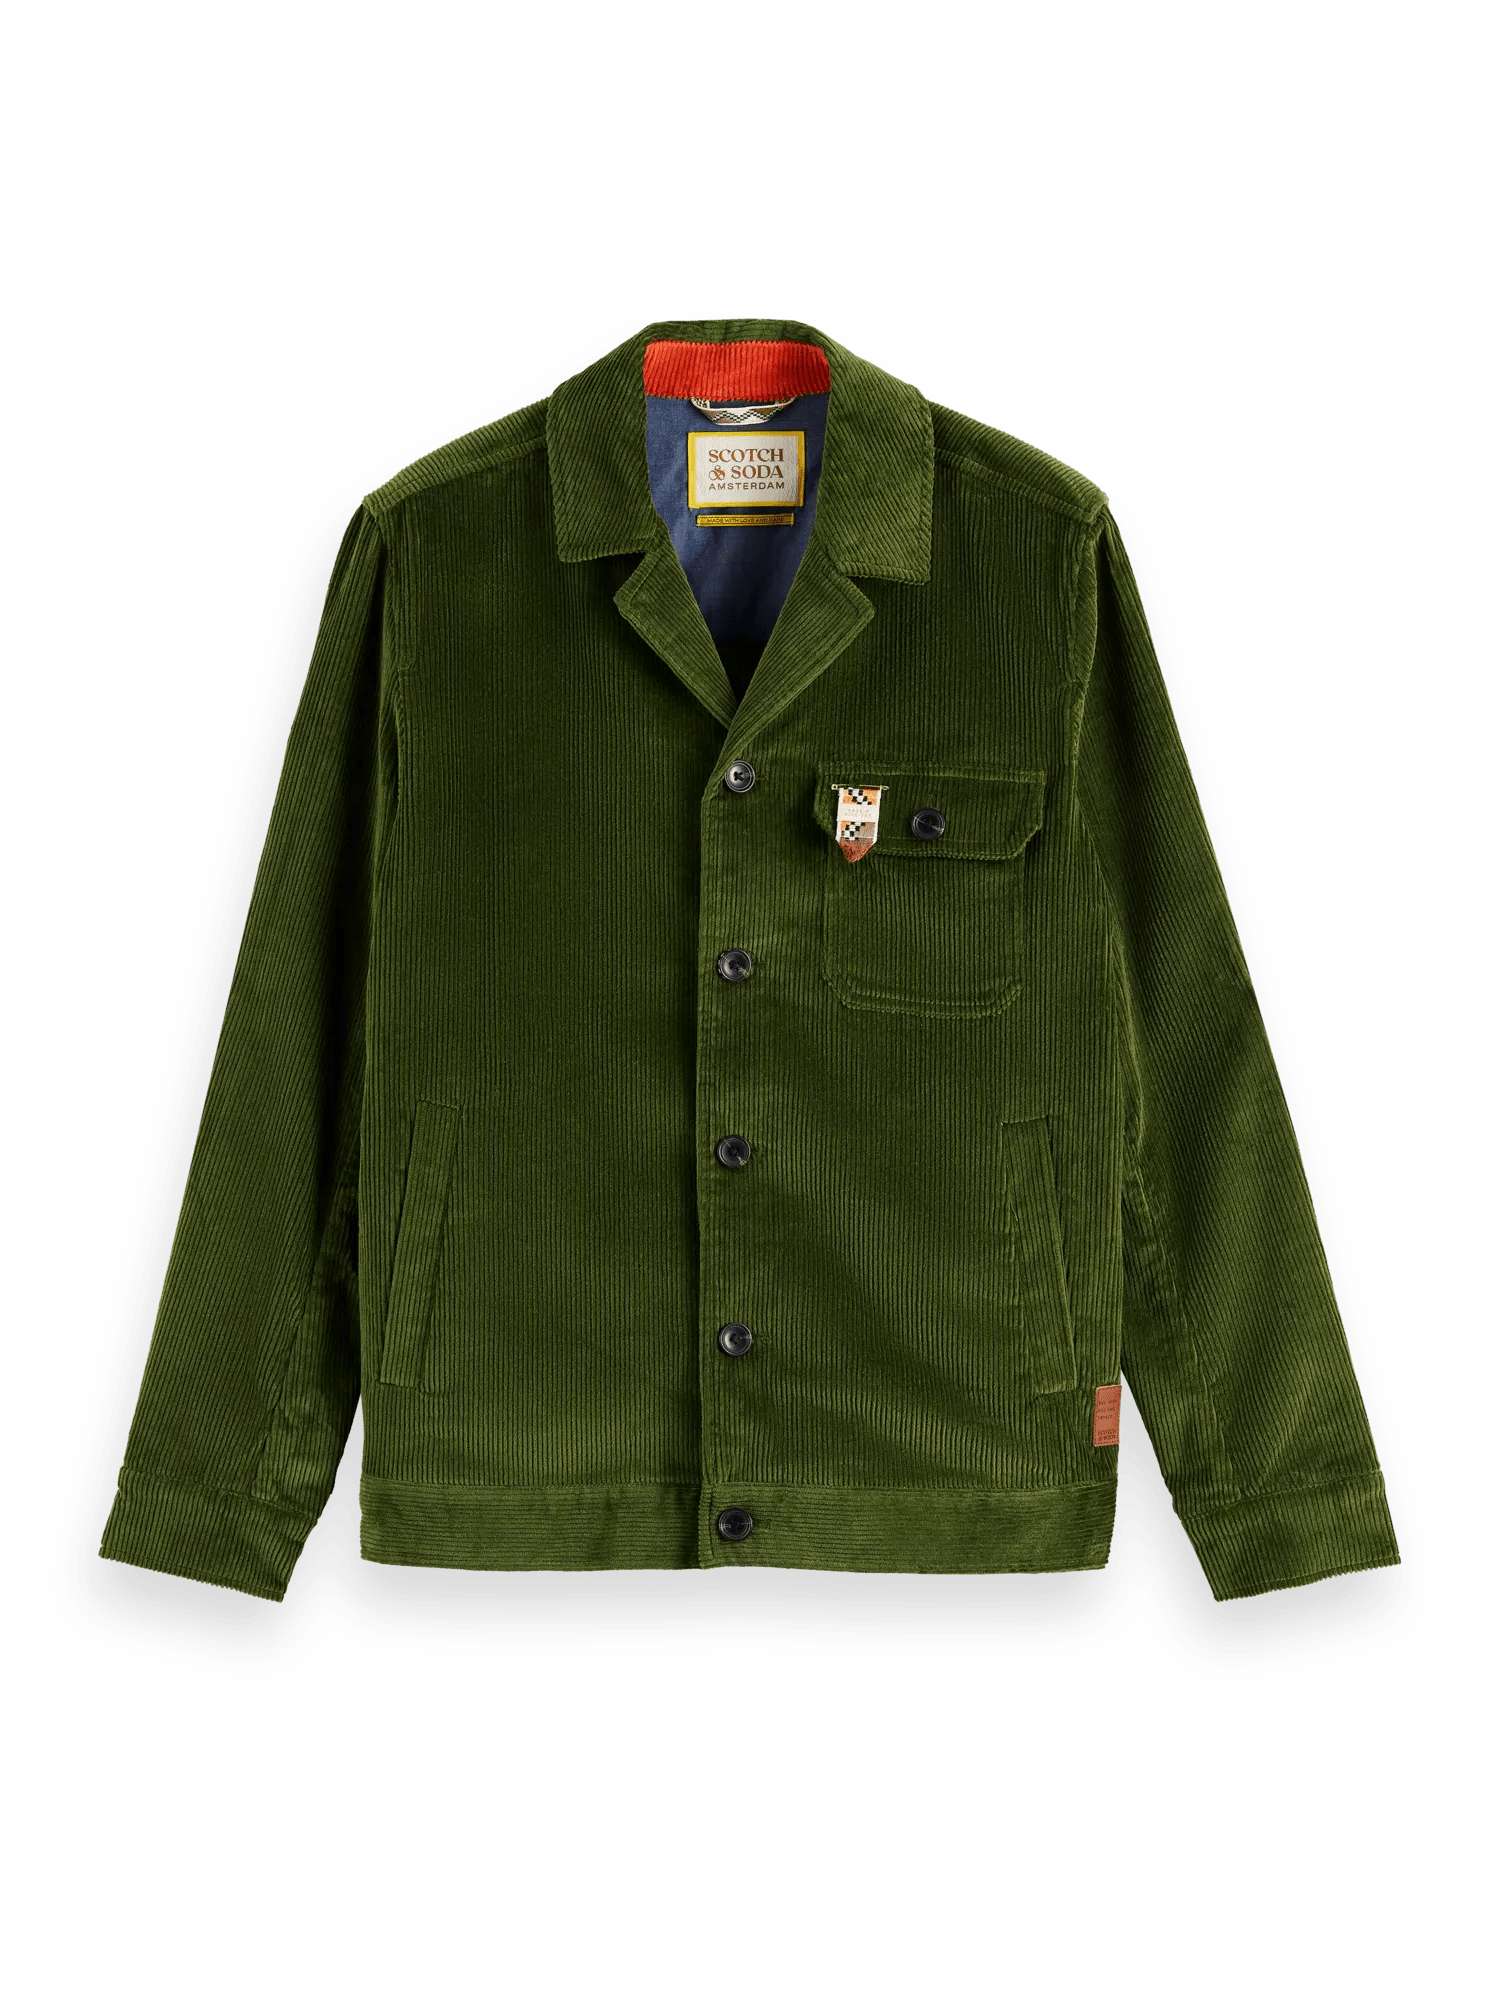 Skechers GO Shield Hybrid Jacket Preto - Textil Parkas Homem 67,33 €